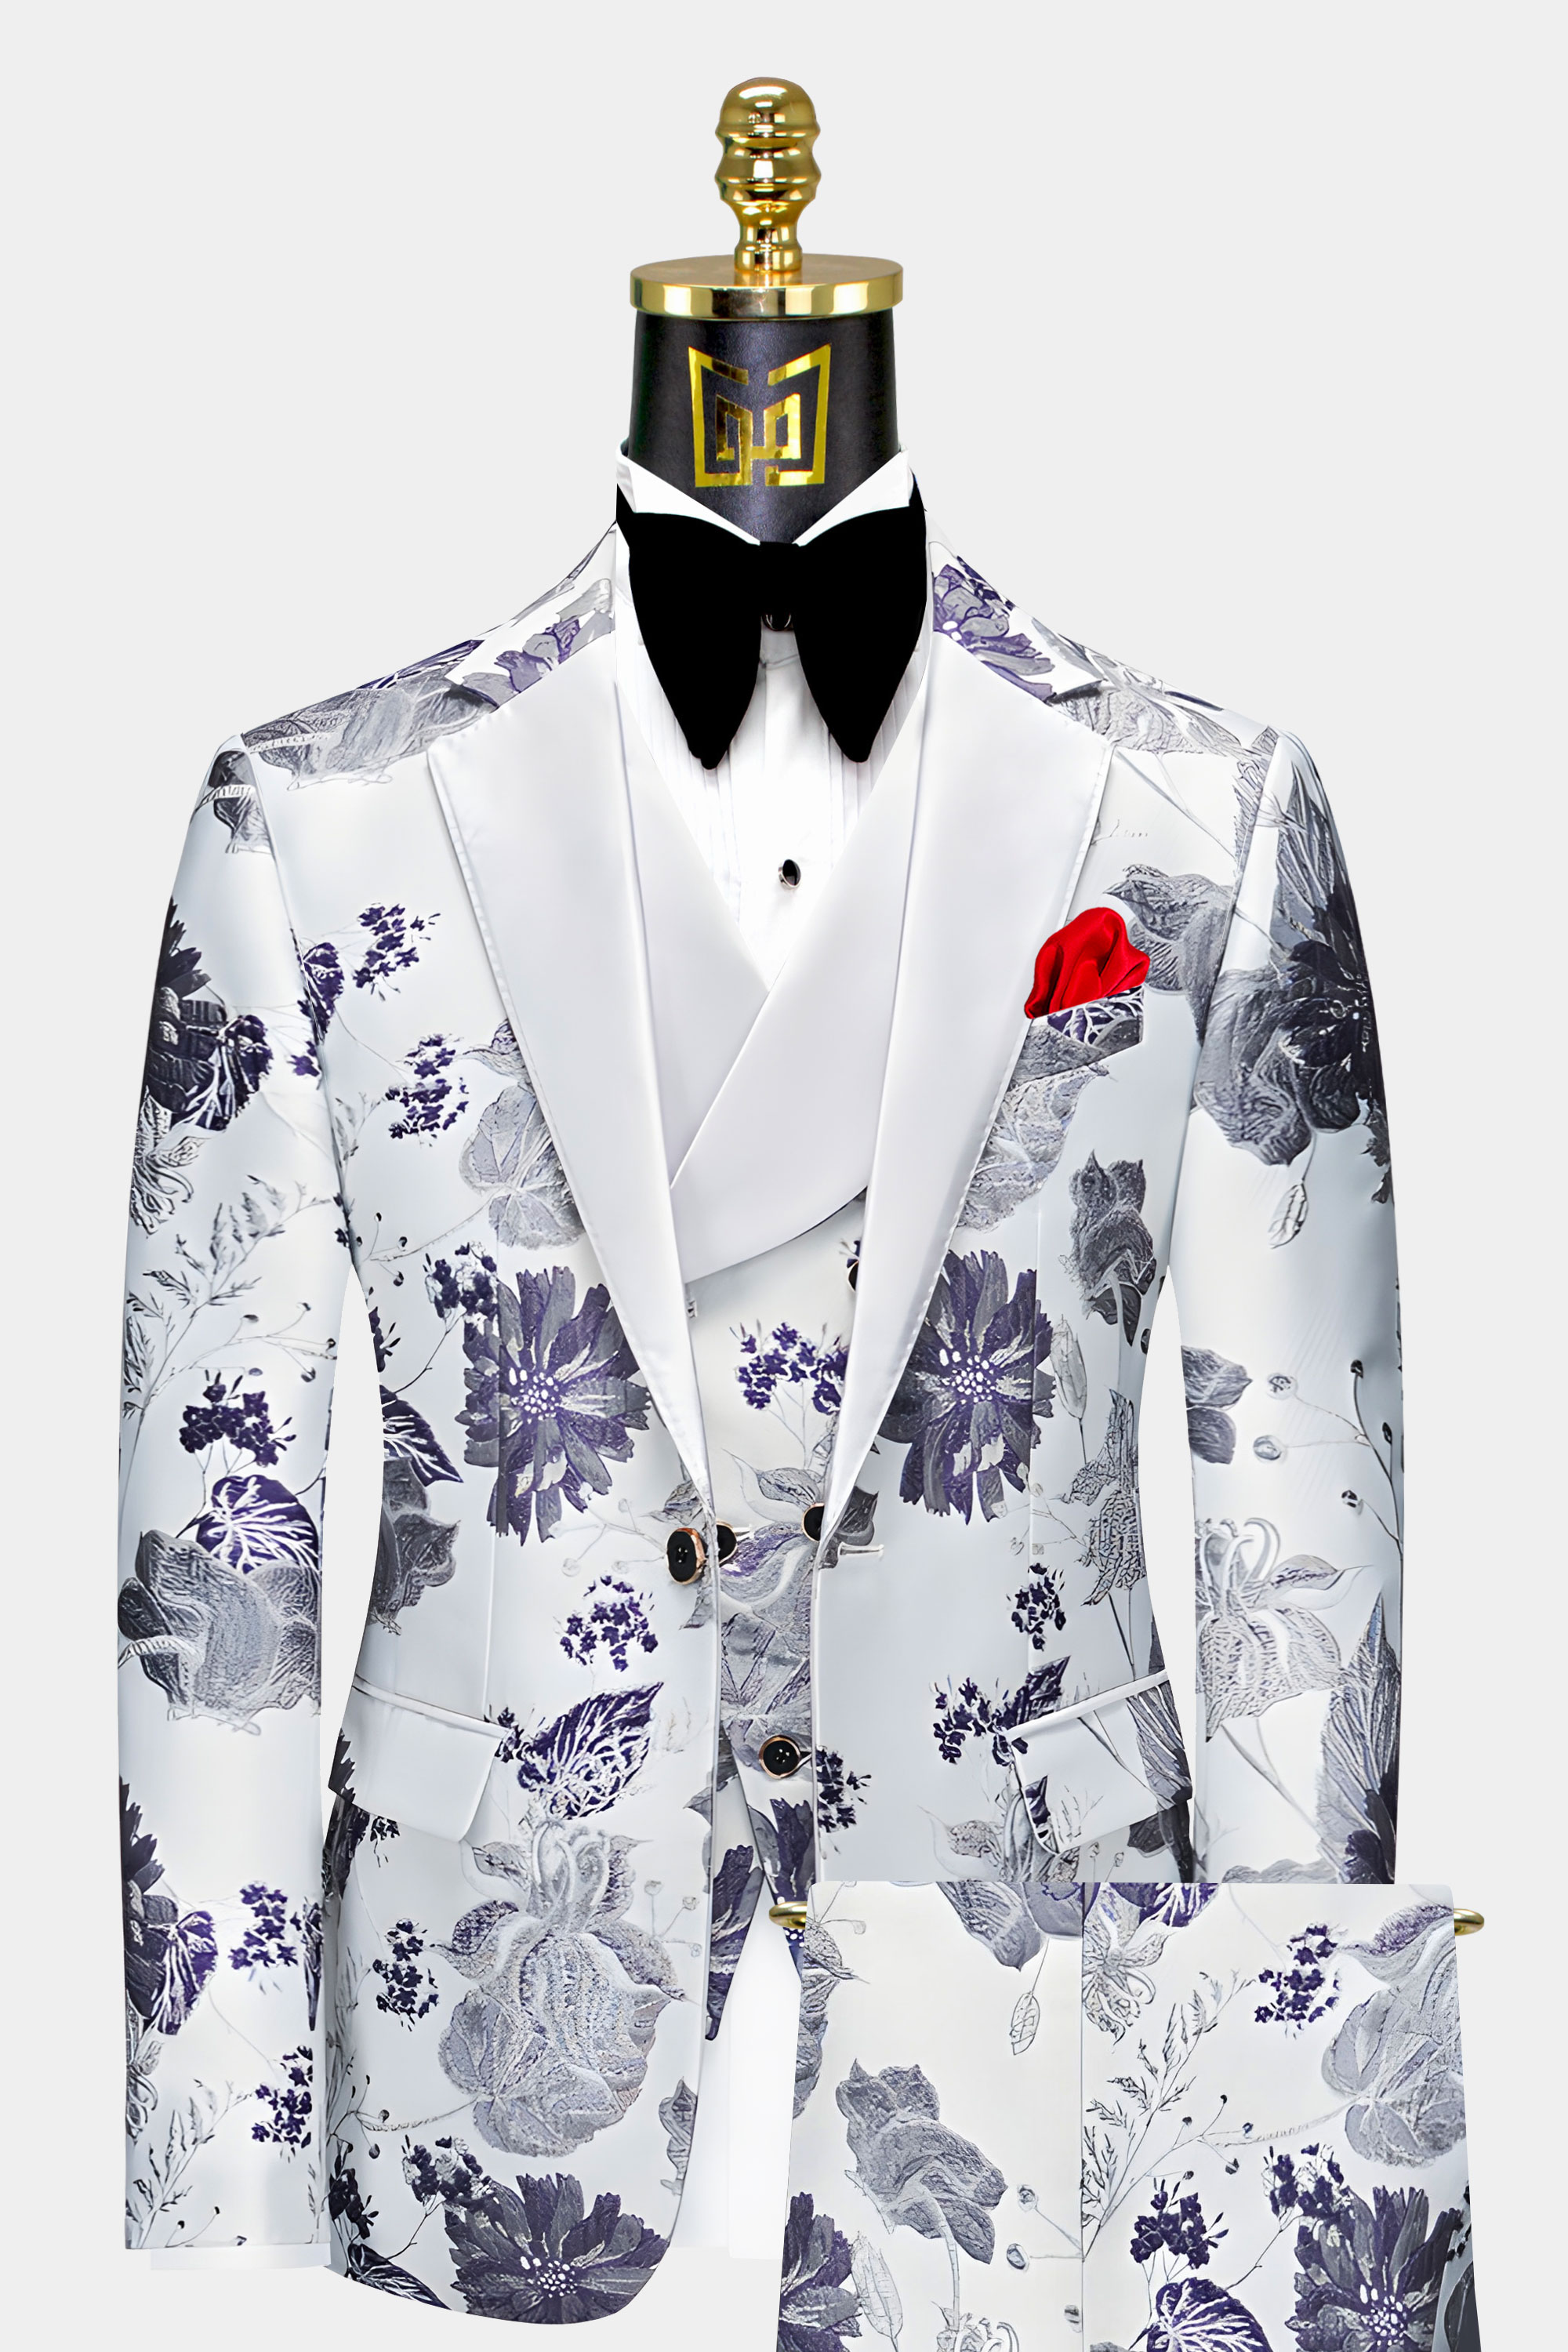 Mens-White-and-Orchind-Tuxedo-Prom-Groom-Wedding-Suit-from-Gentlemansguru.com